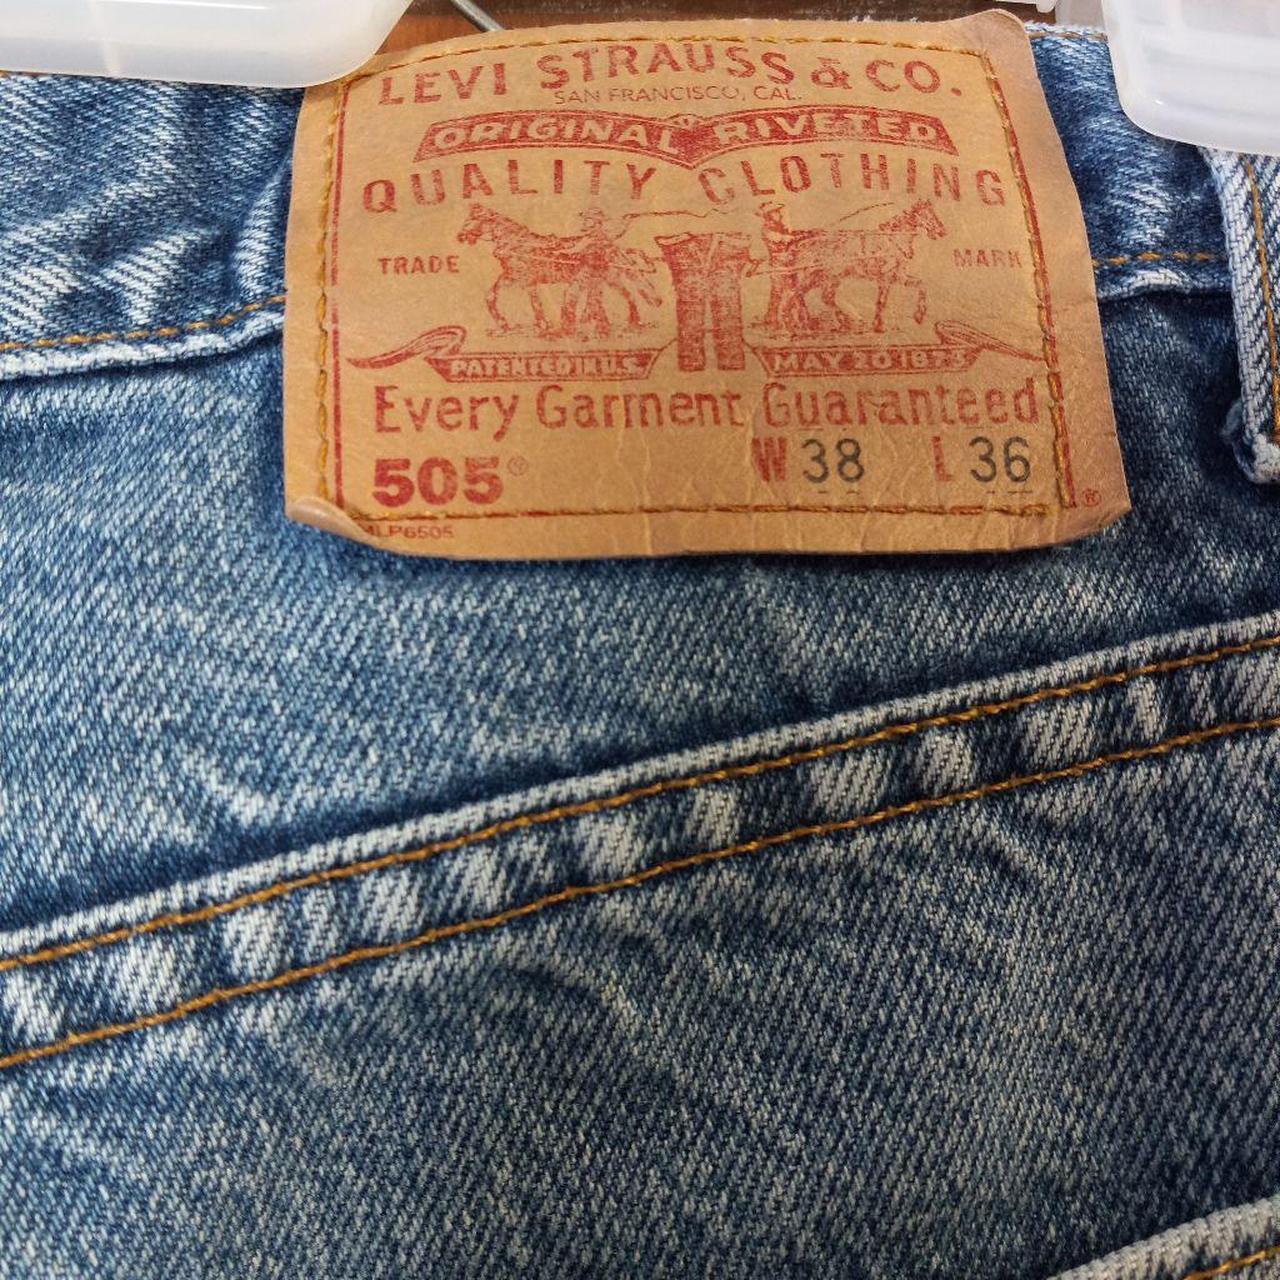 Vintage Levis 505 Every Garment Guaranteed Red Tab - Depop